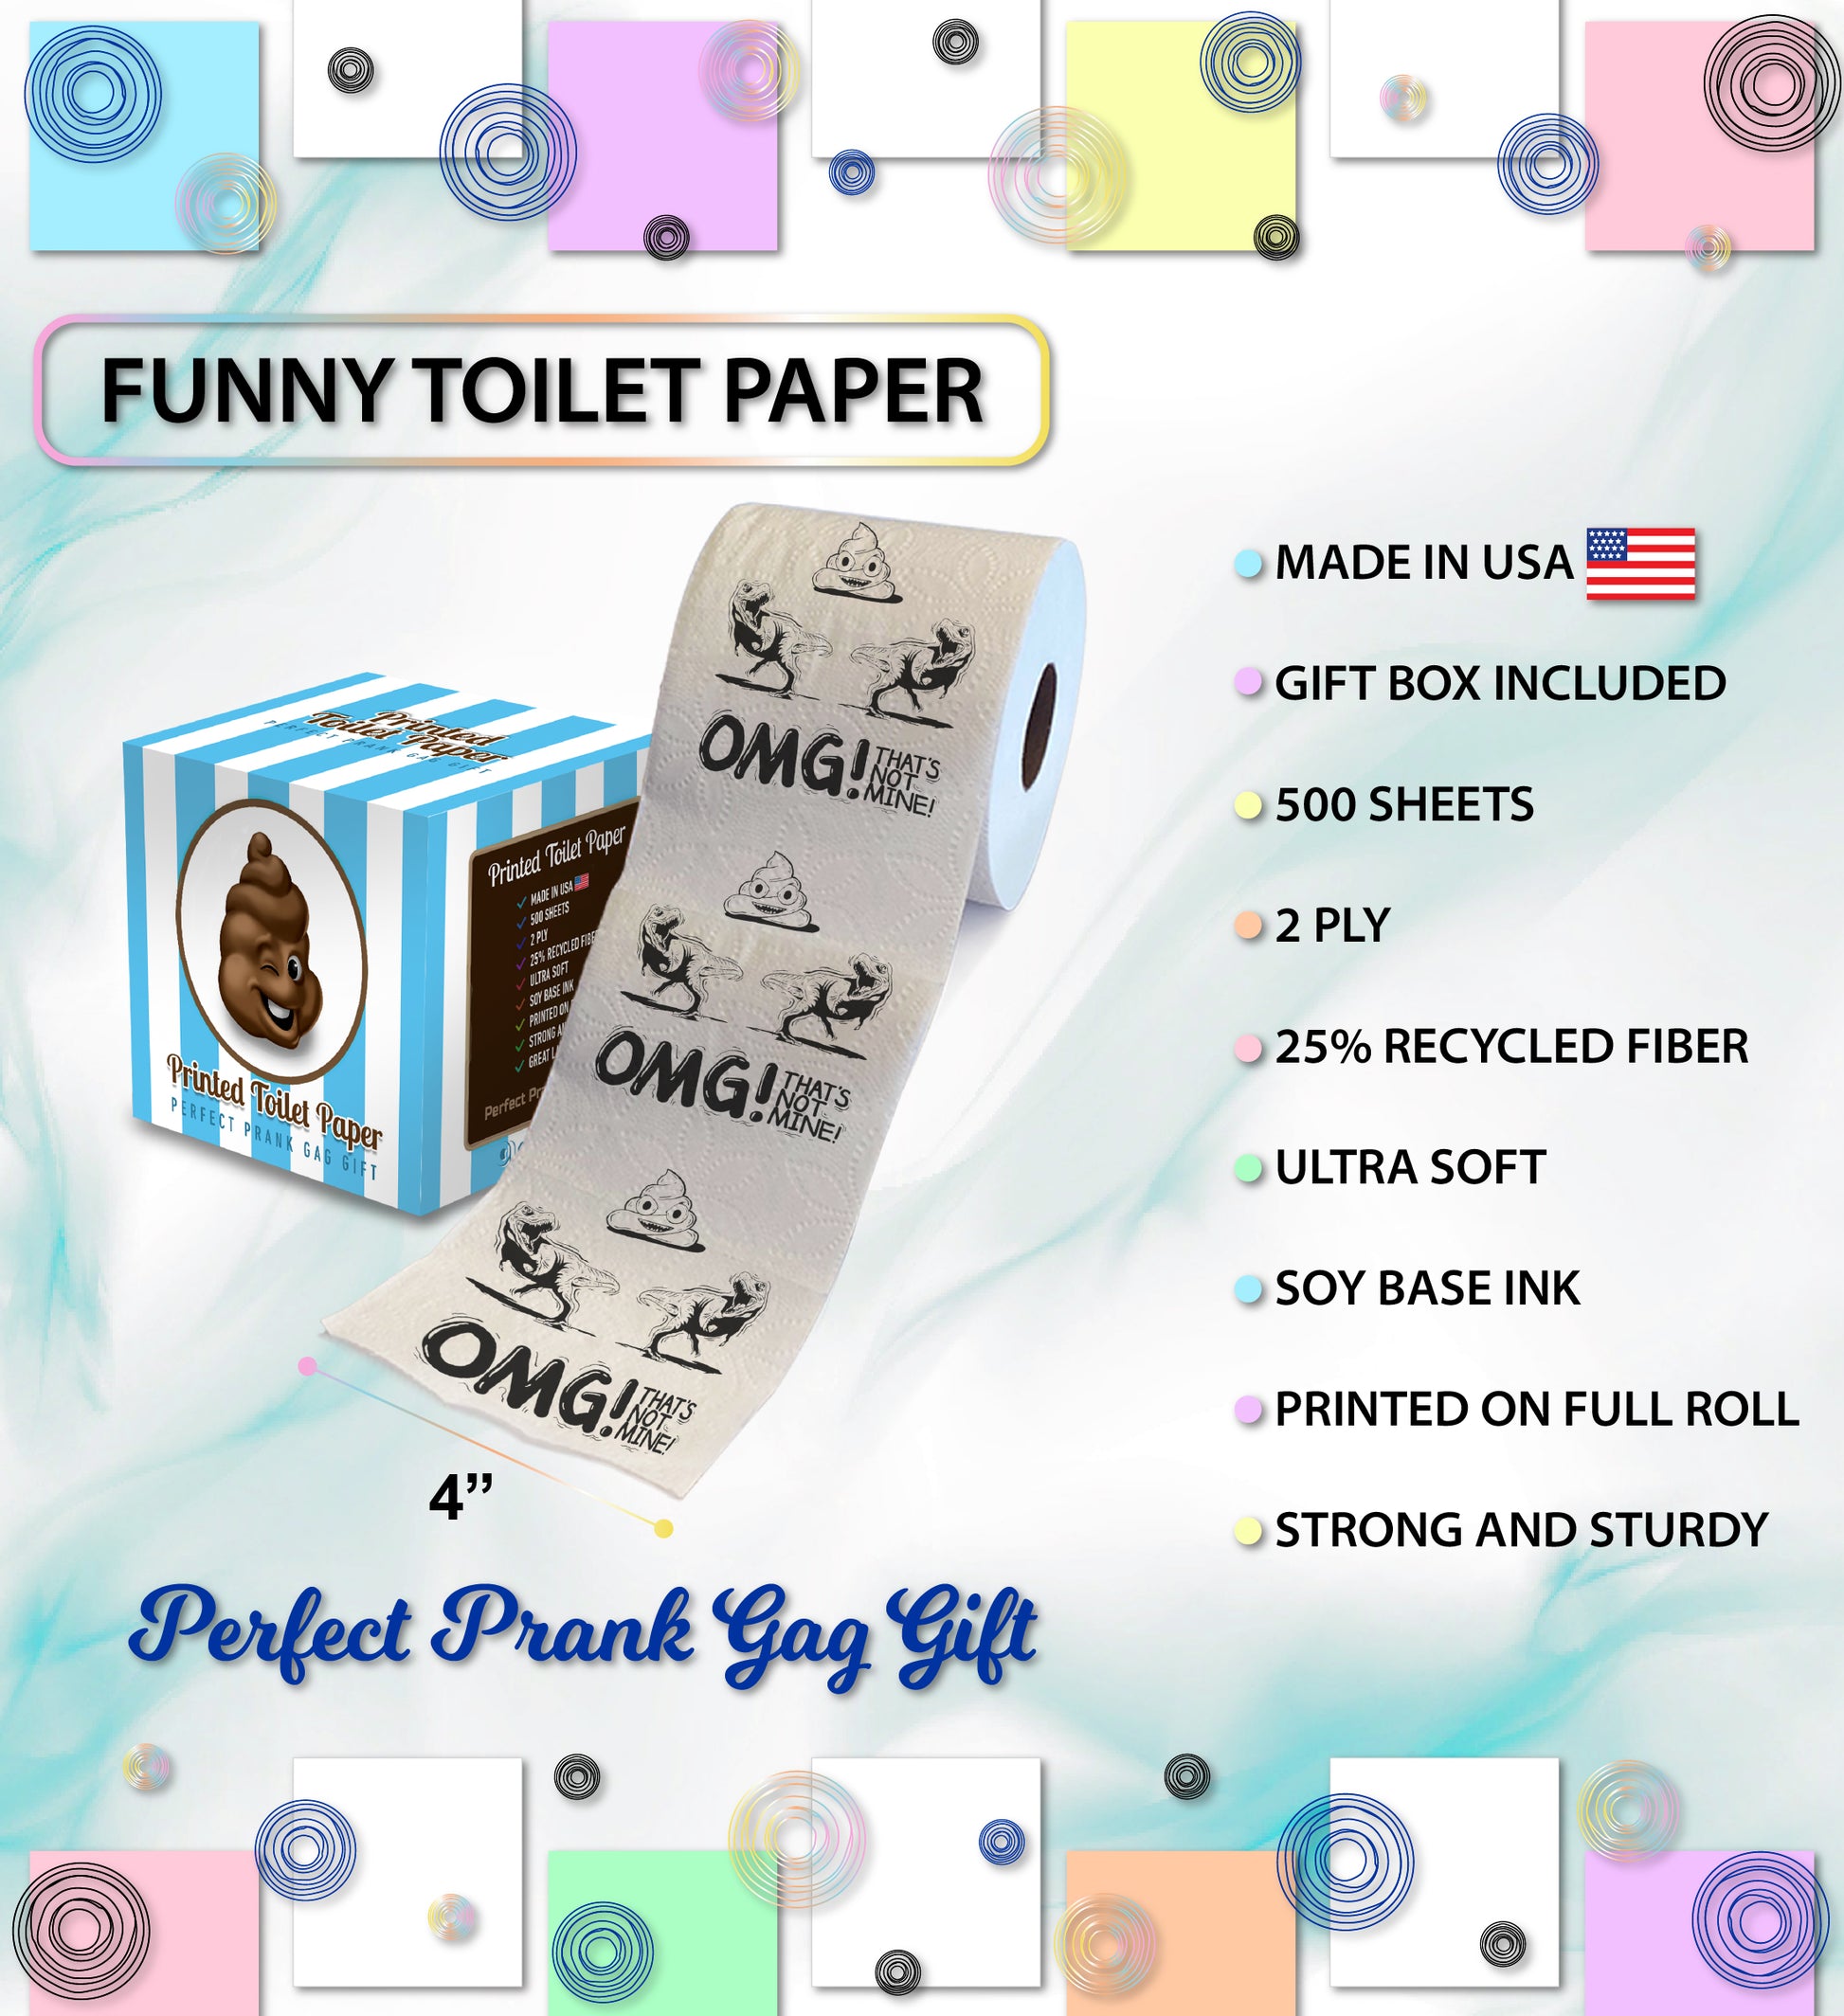 Fun Toilet Paper for Kids